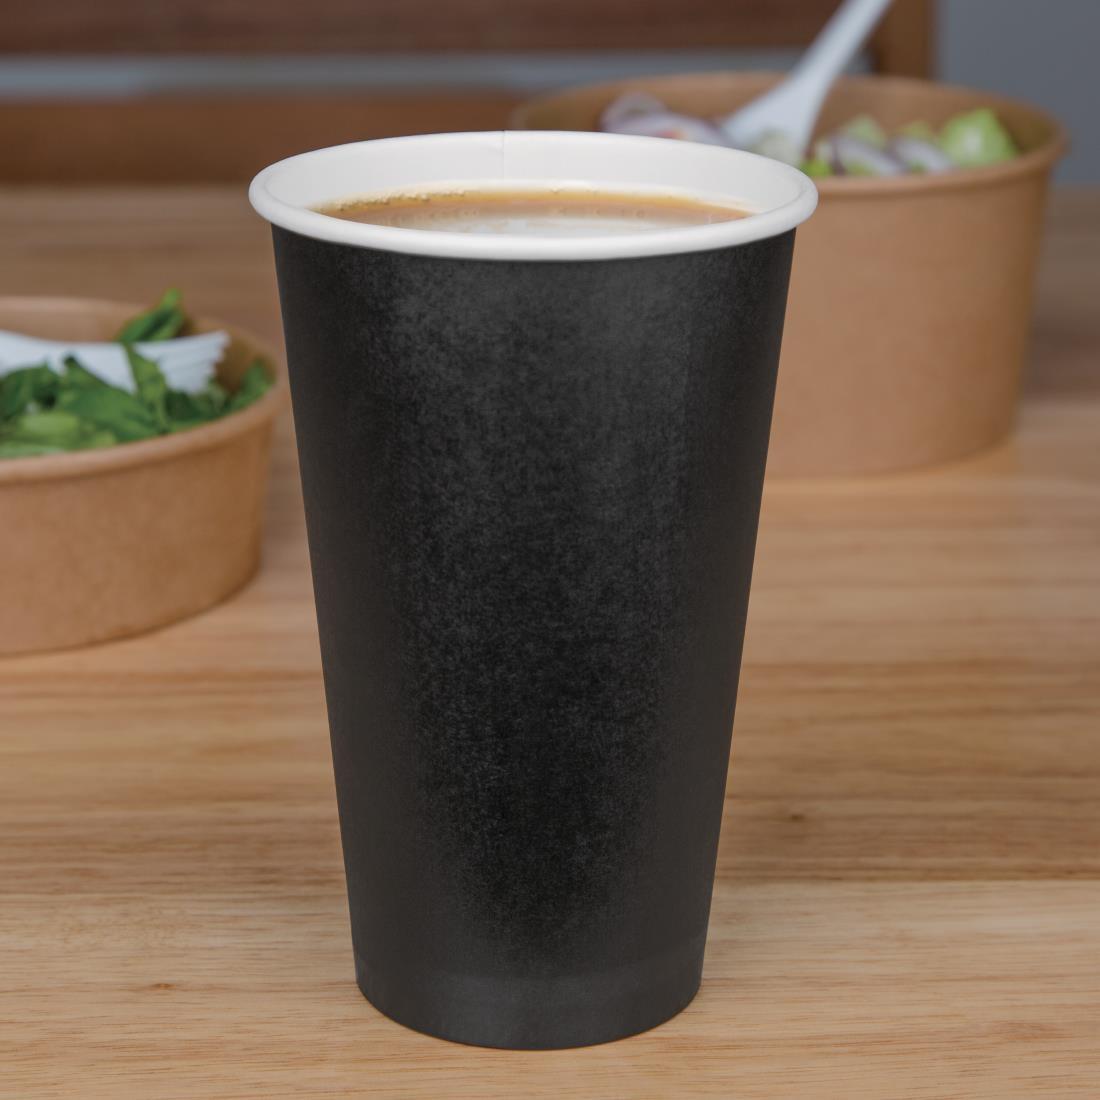 Fiesta Recyclable Coffee Cups Single Wall Black 455ml / 16oz (Pack of 1000) - GF044  - 4